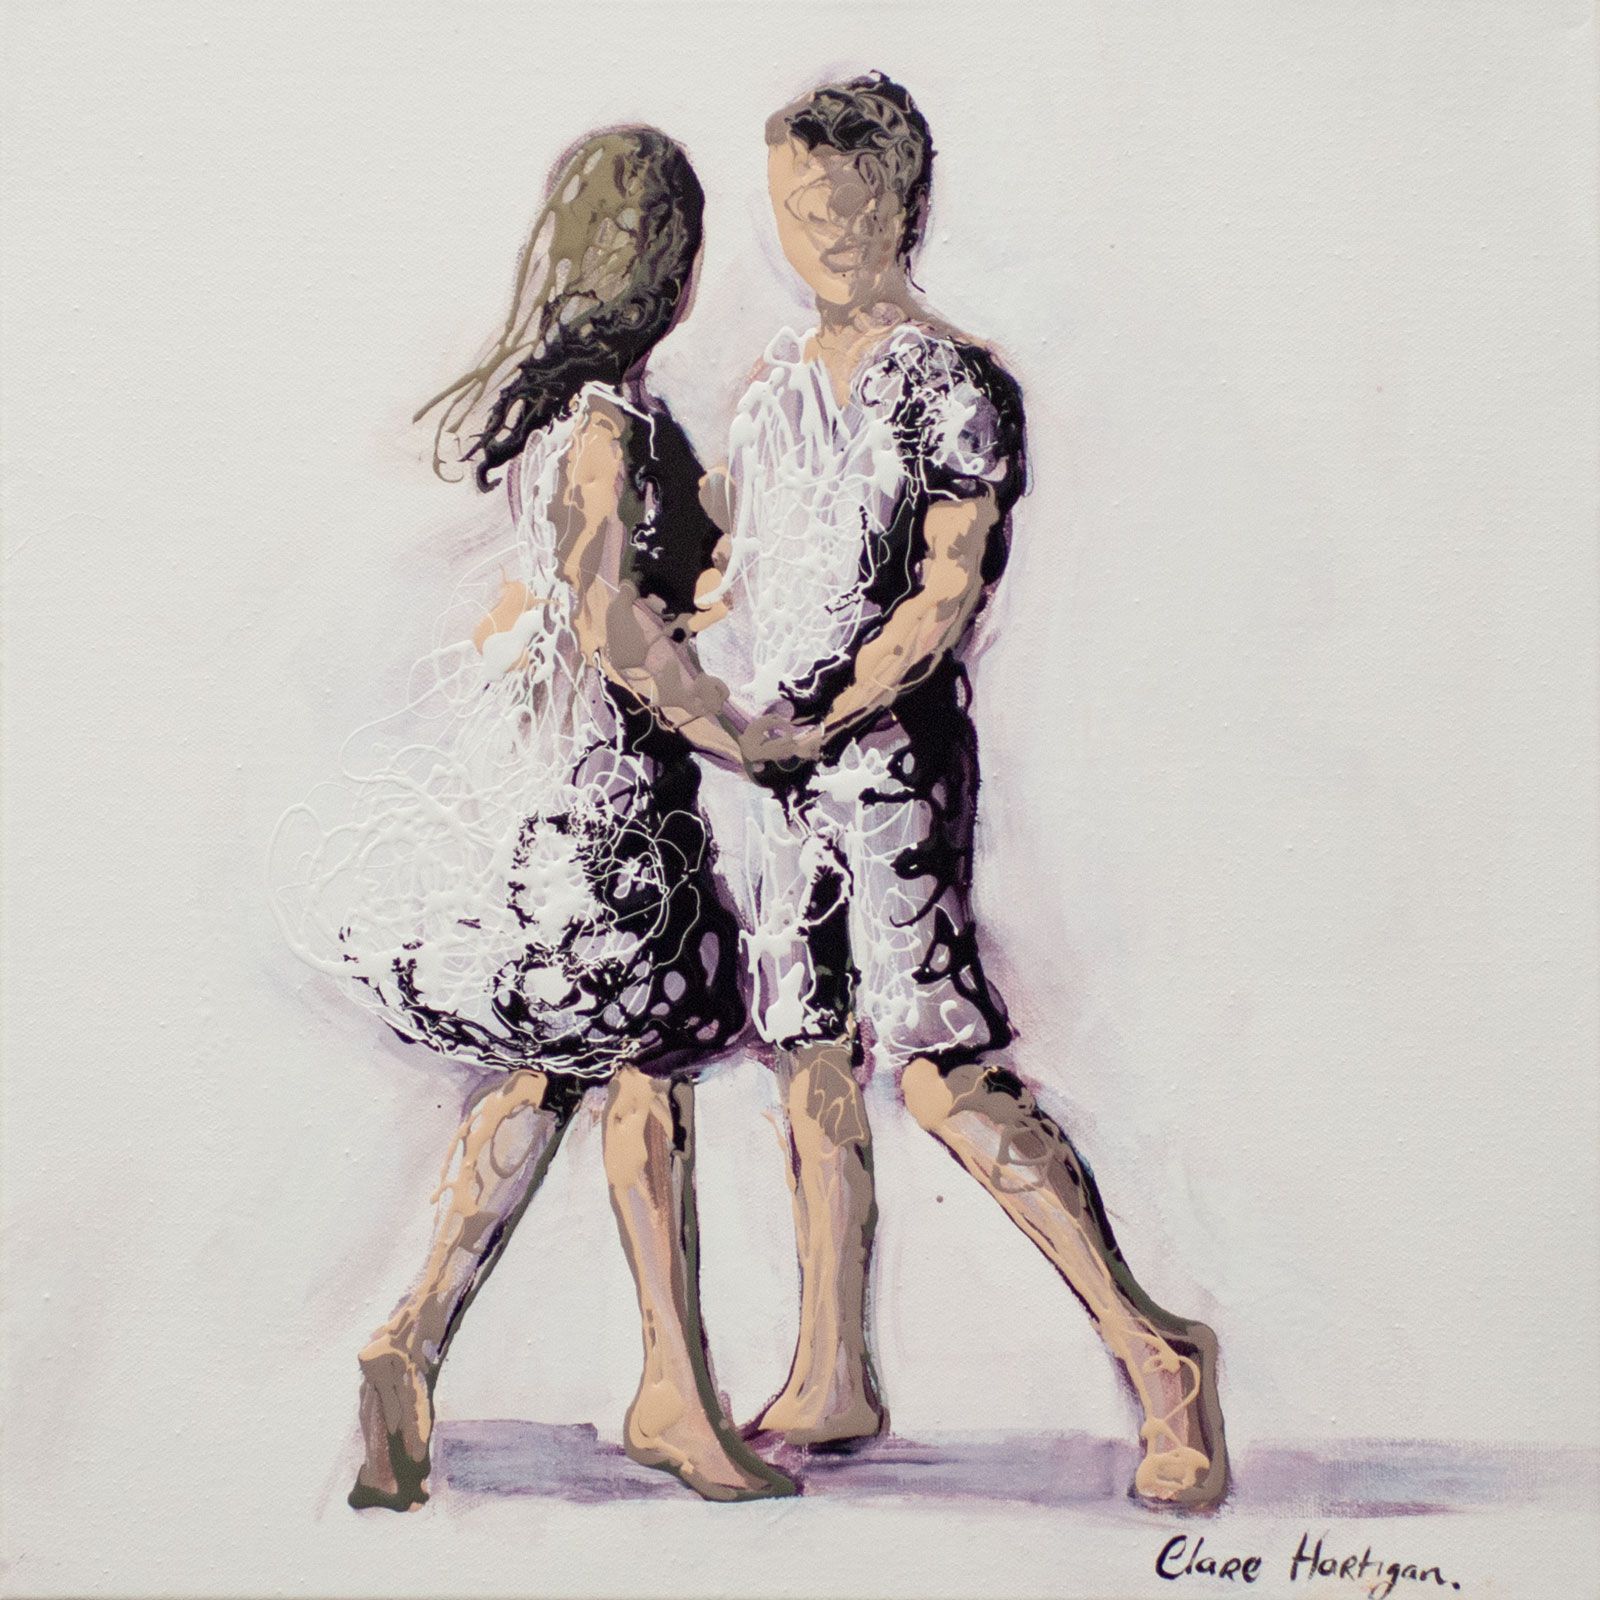 Dance the Dance by Clare Hartigan